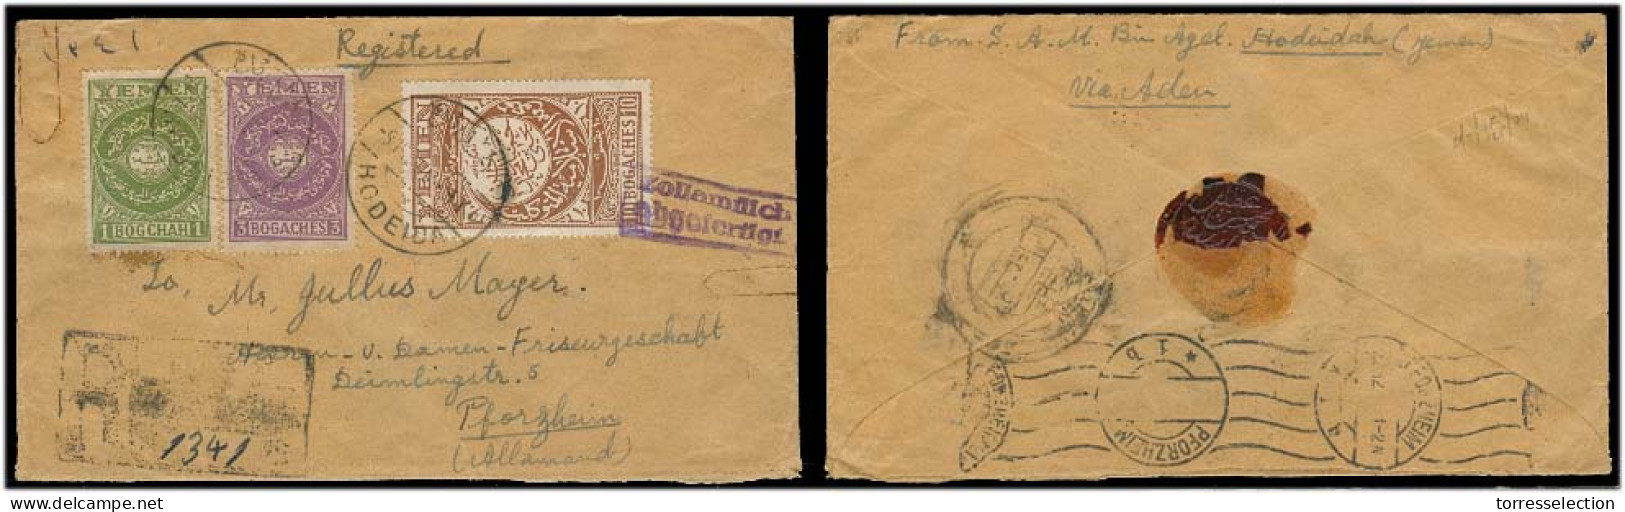 YEMEN. 1937 (22 Dec). Hodeida - Germany. Reg Multifkd Env. Via Aden + Arrival Reverse + German Control Mark. Fine. - Yemen